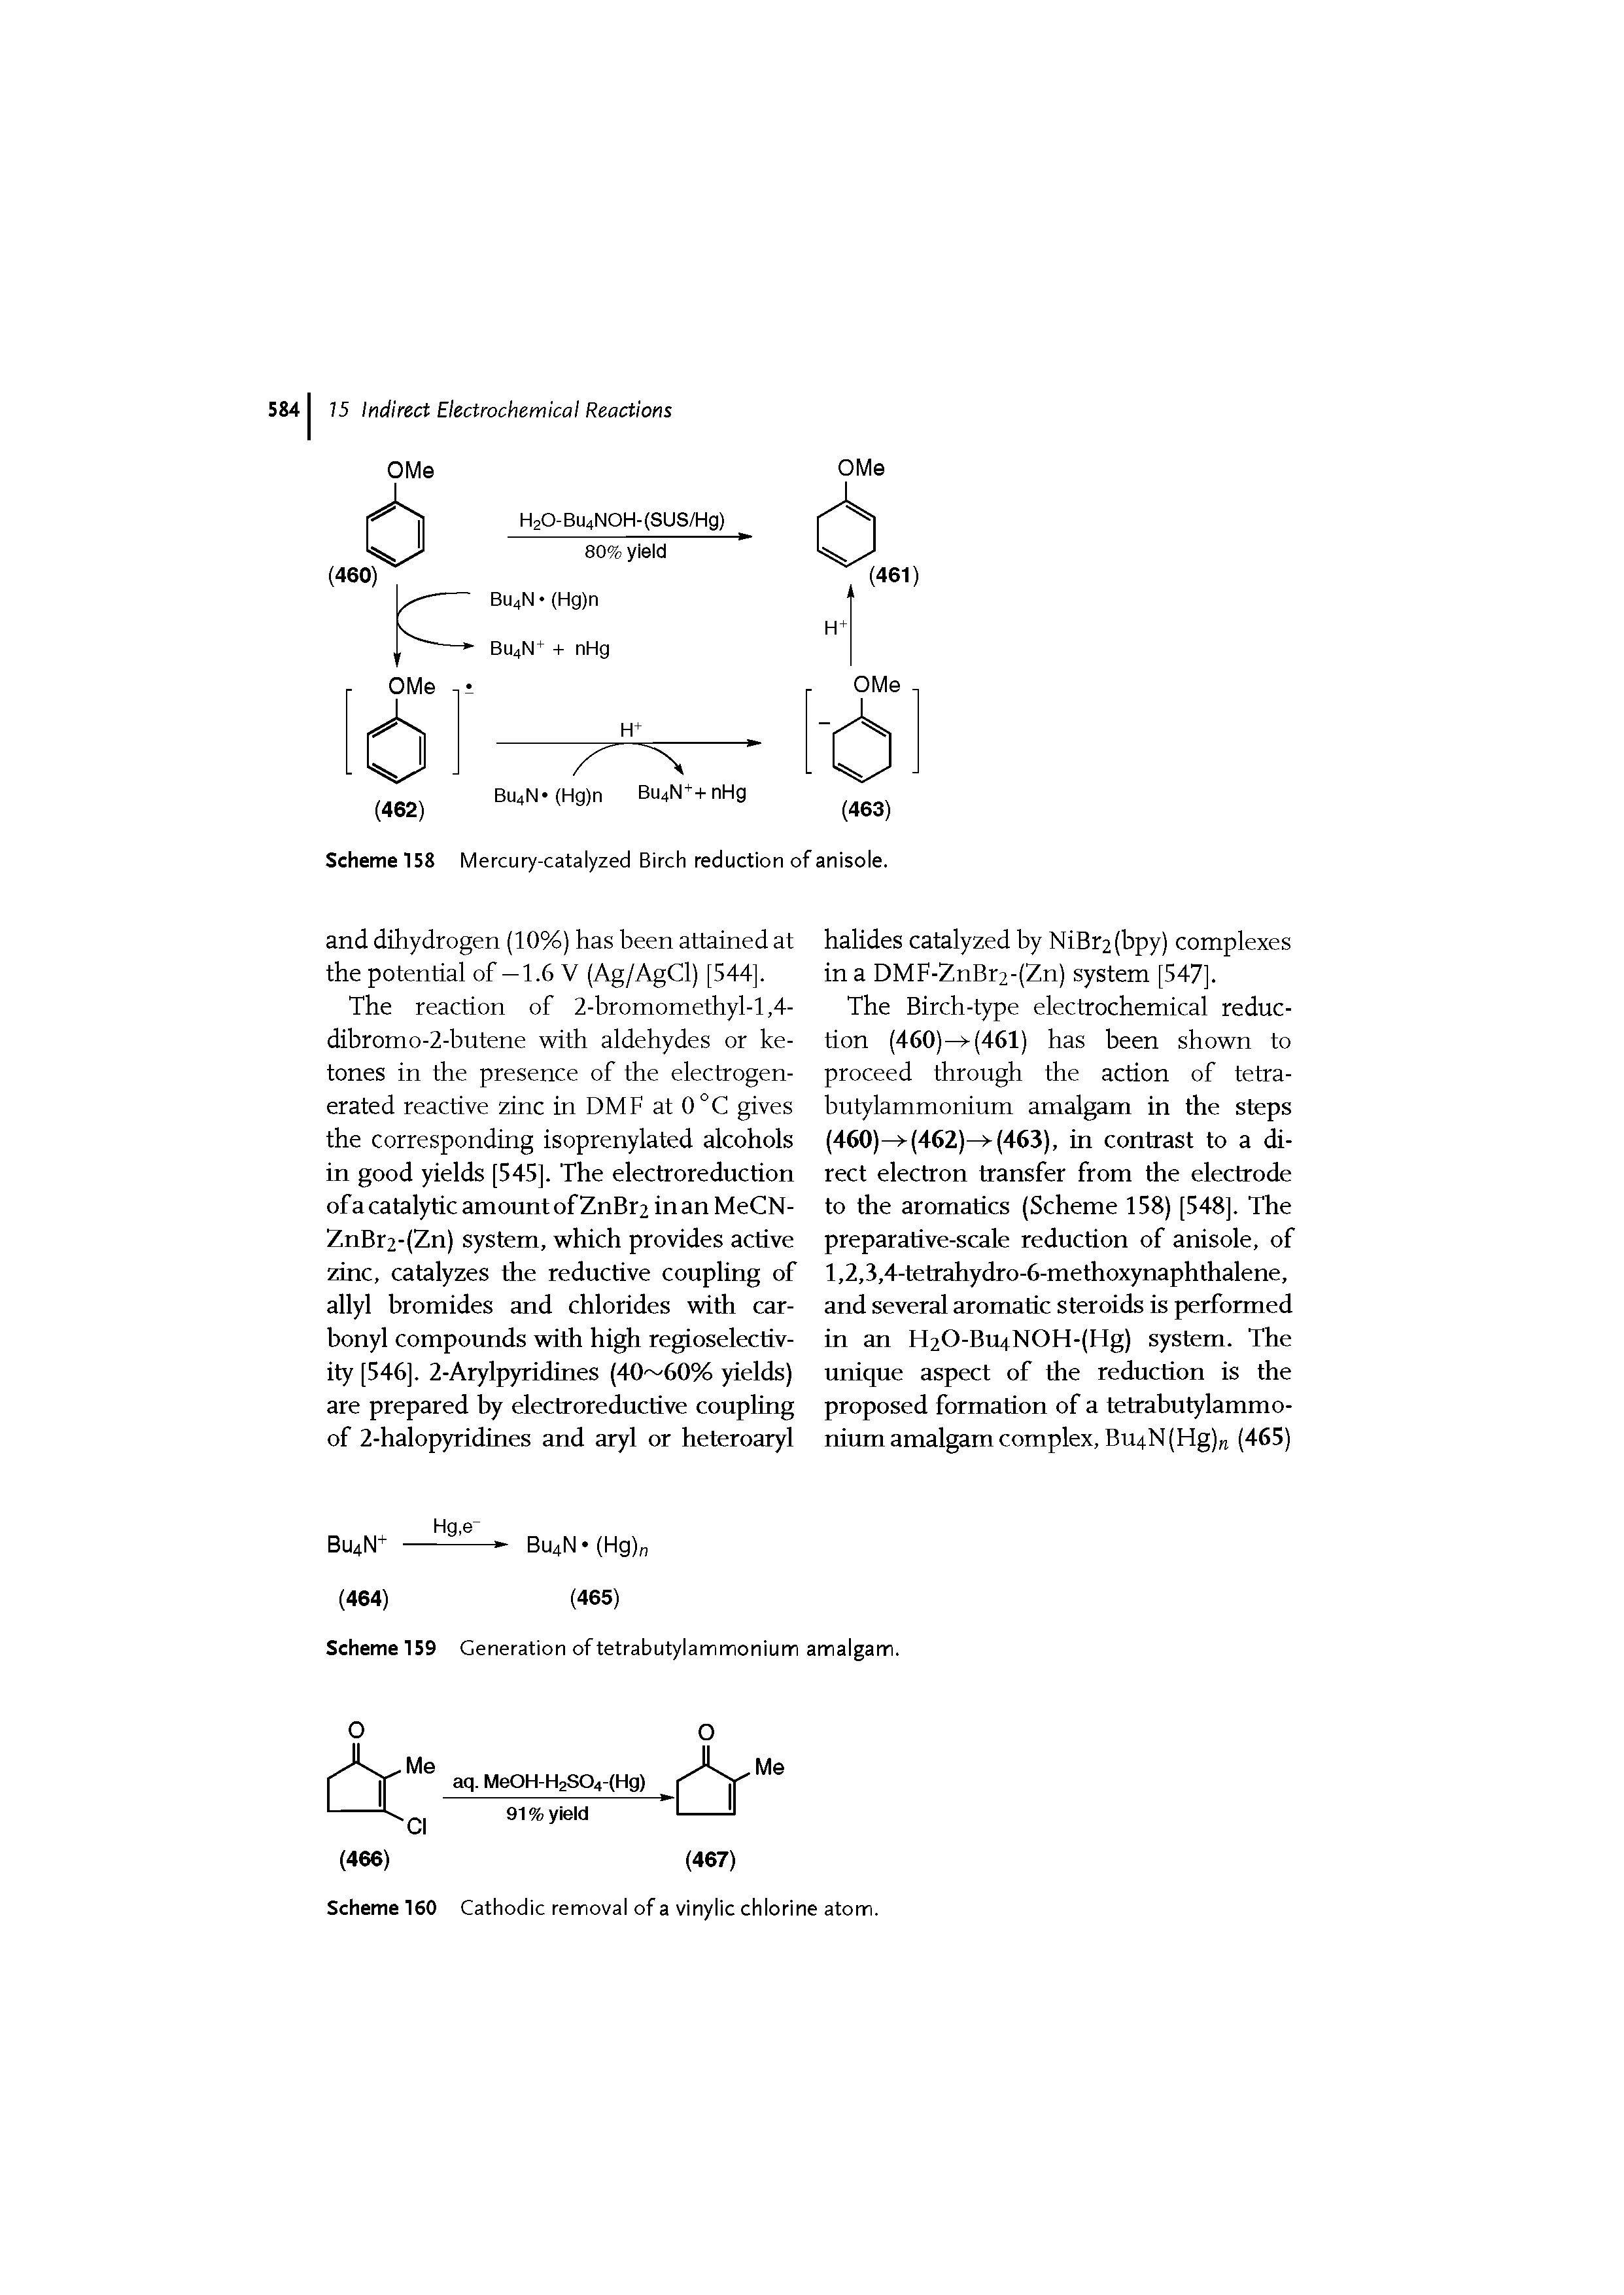 Scheme 160 Cathodic removal of a vinylic chlorine atom.